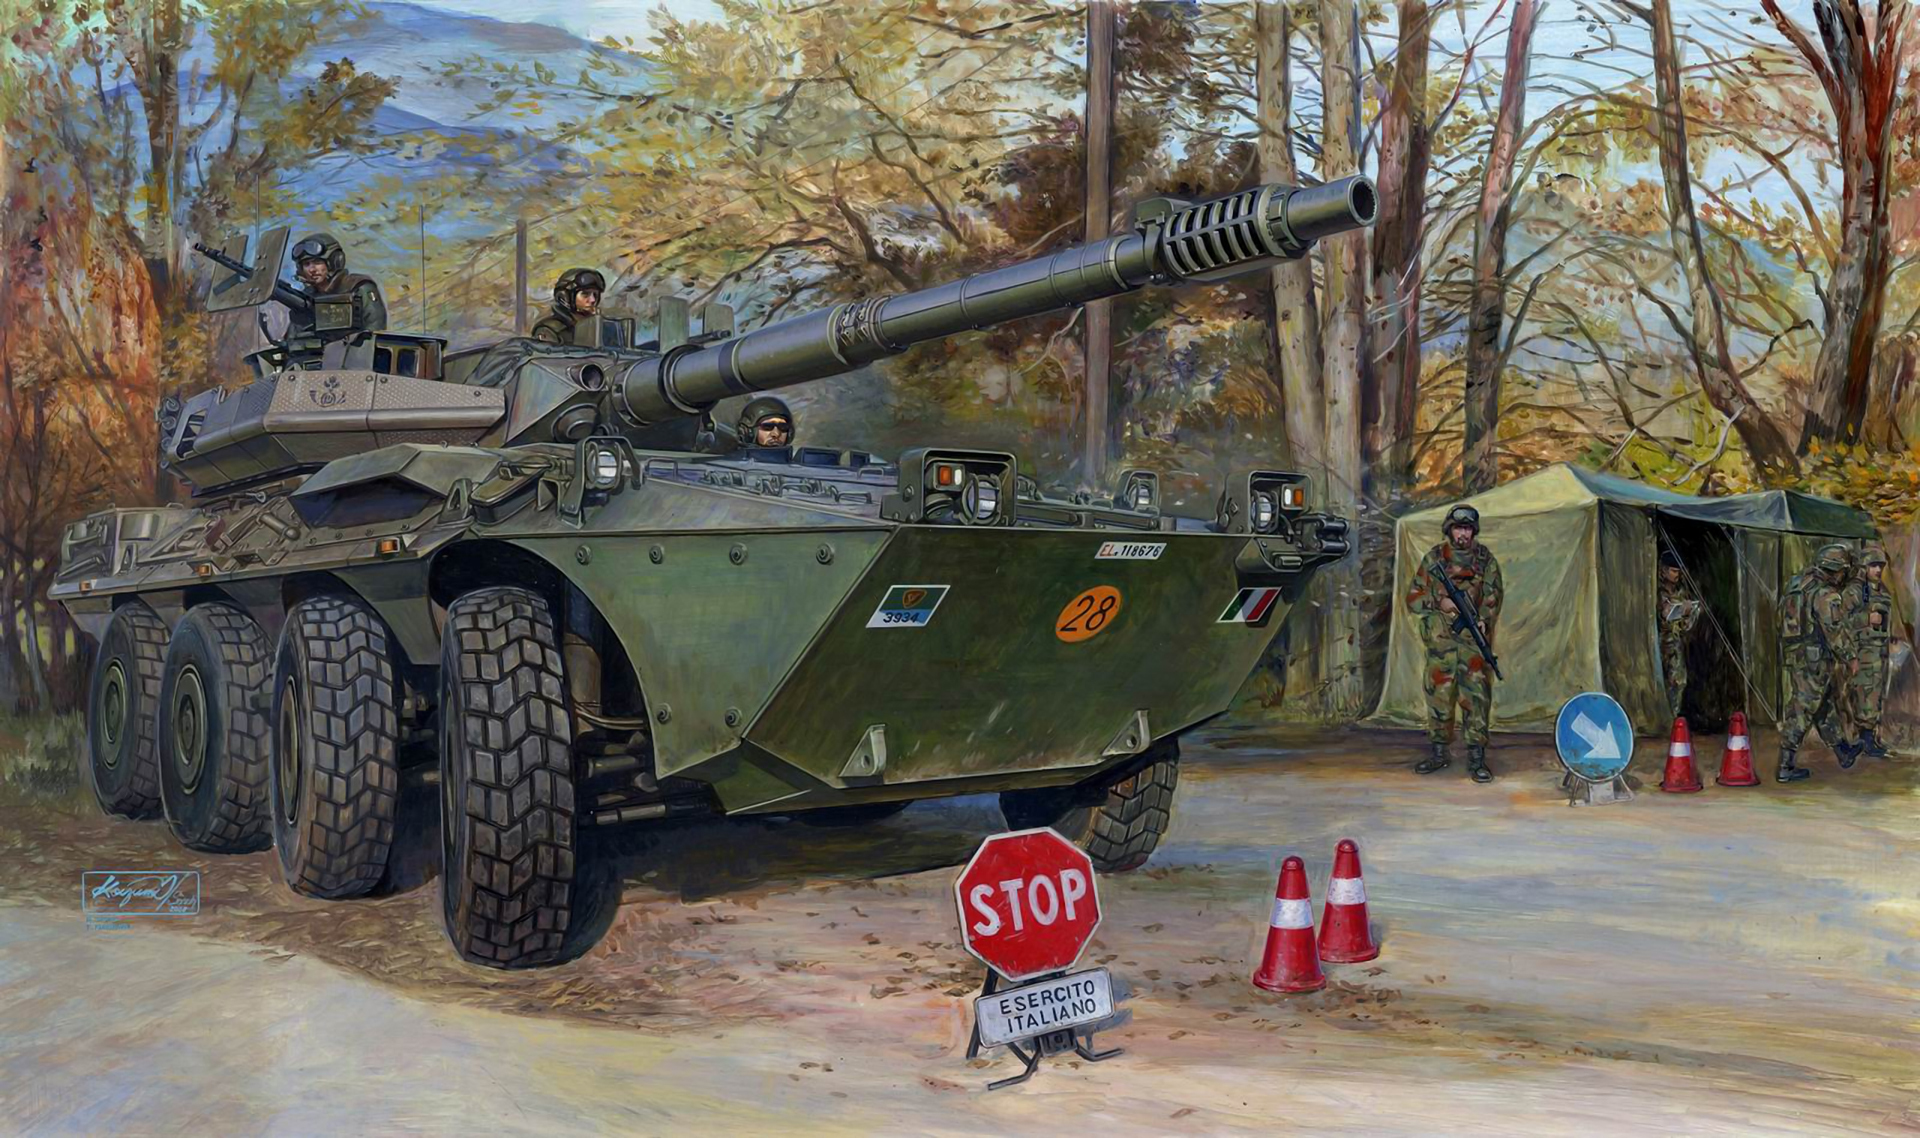 General 1920x1138 tank army military military vehicle artwork soldier helmet traffic cone stop sign trees uniform gun